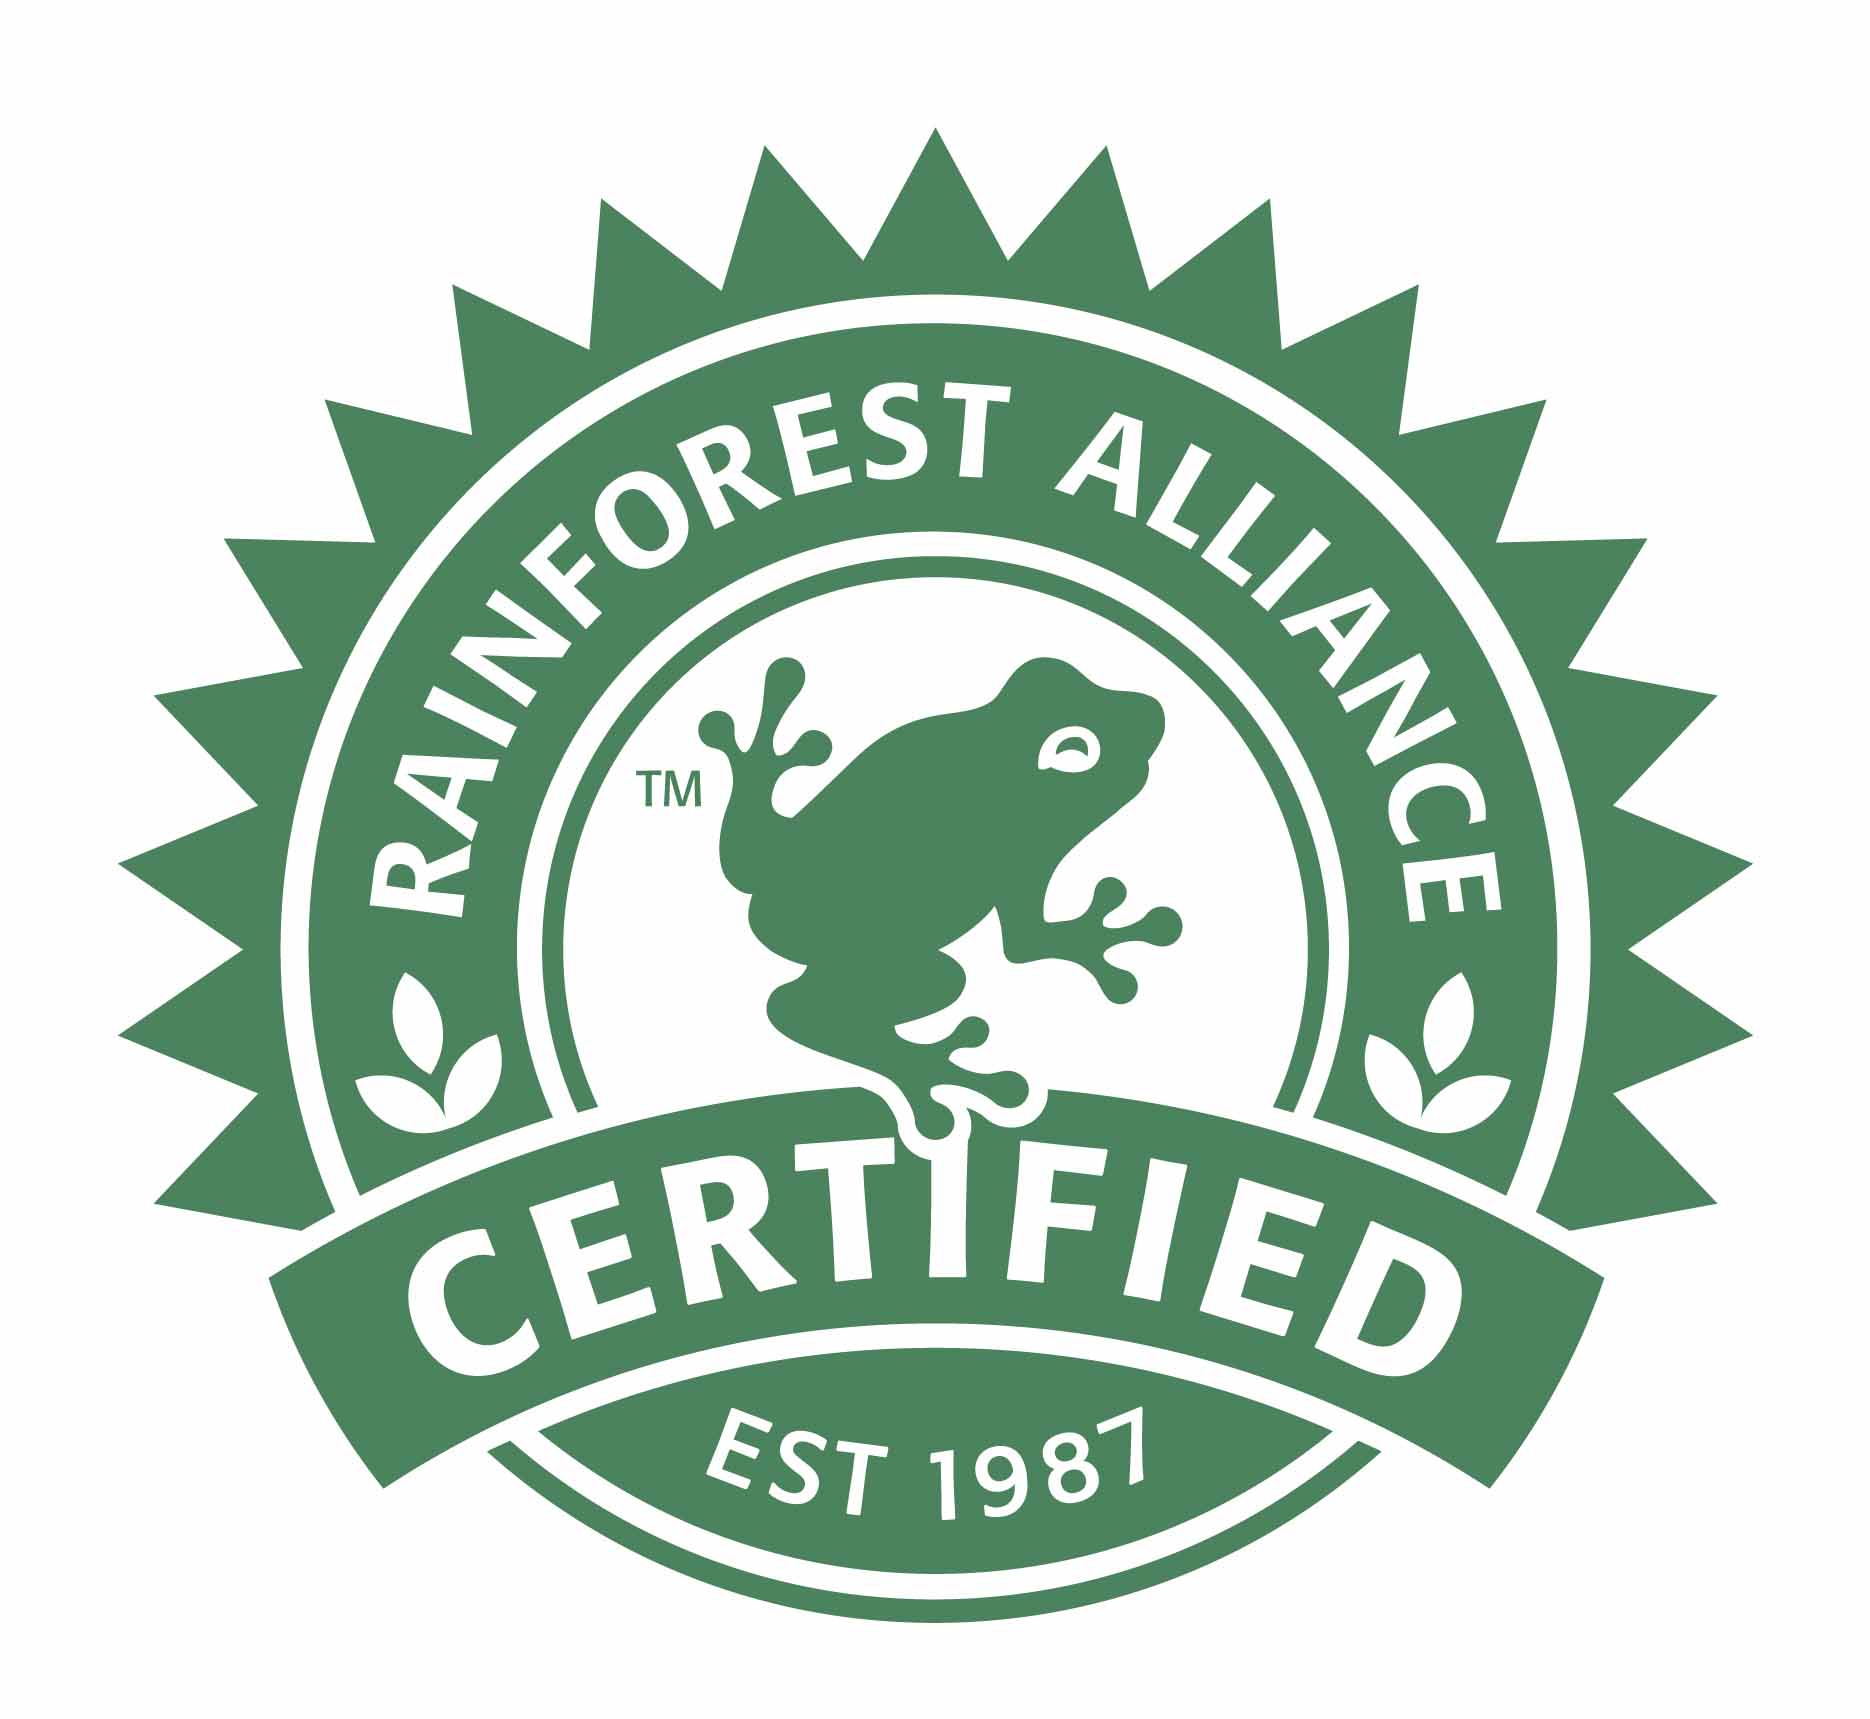 Certified Logo - rainforest-alliance-certified-logo - Business of Story ...